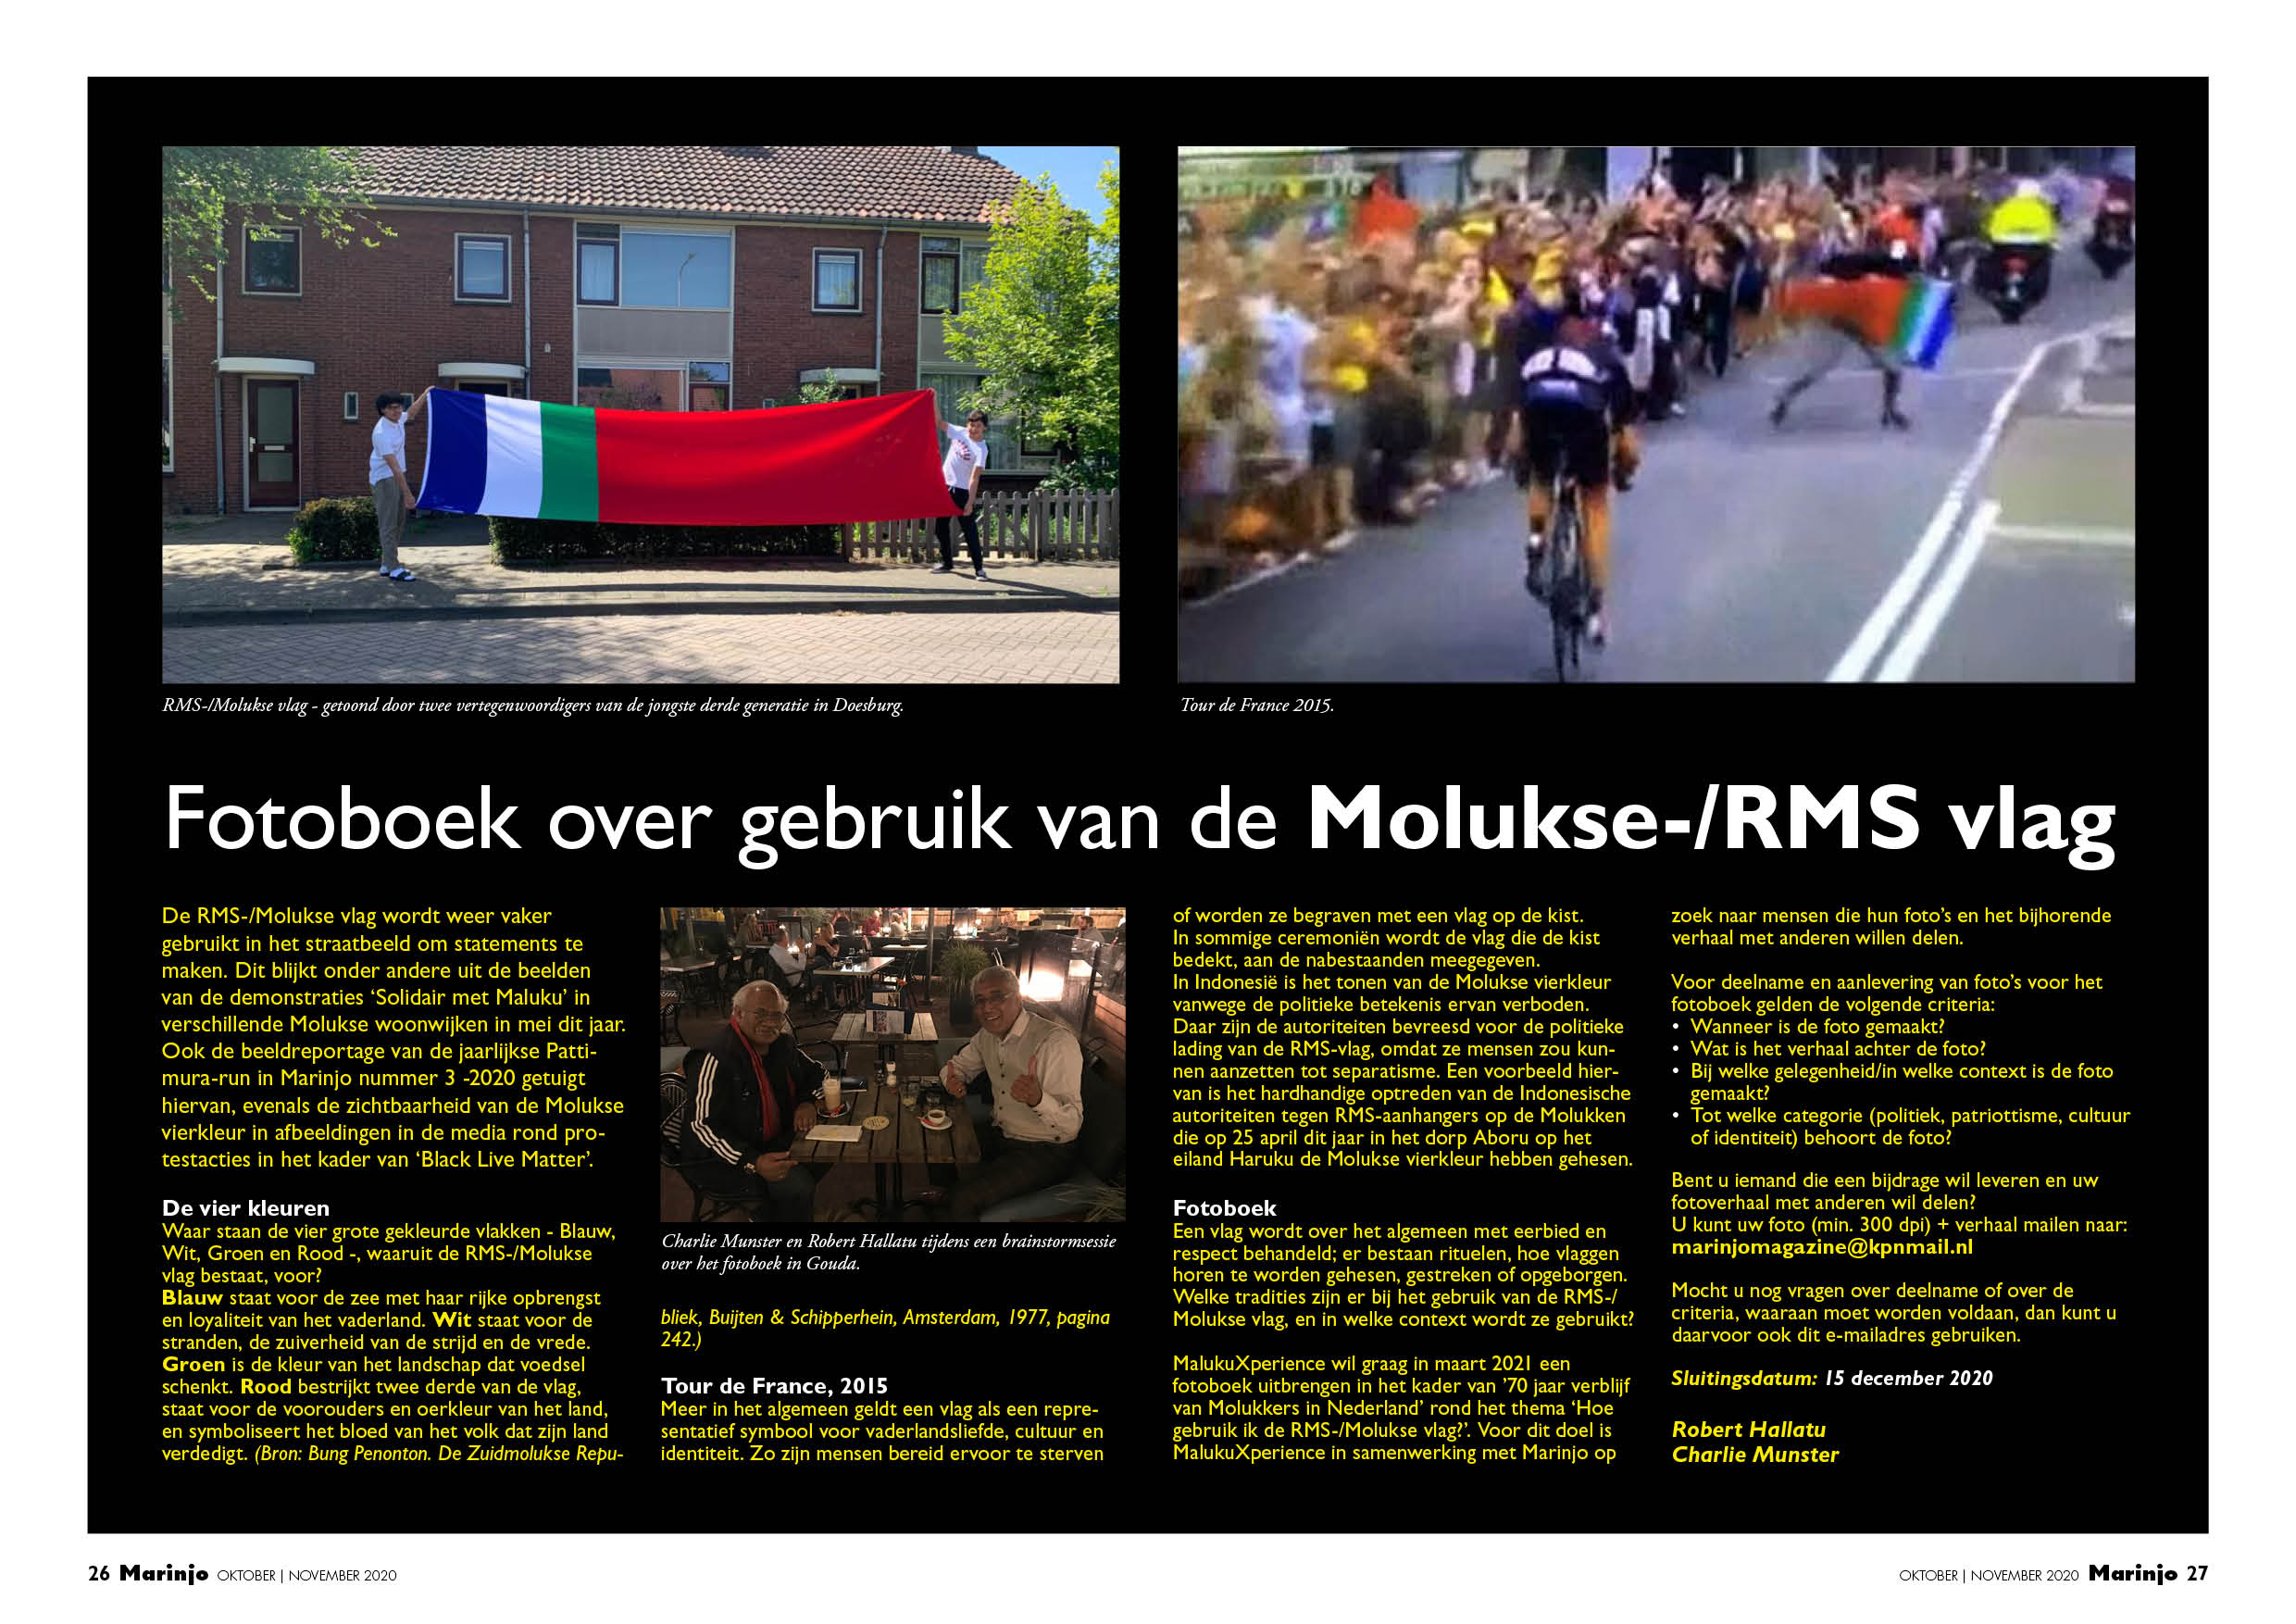 Fotoverhalen over gebruik RMS-/Molukse vlag VERLENGD t/m 30 april 2021!